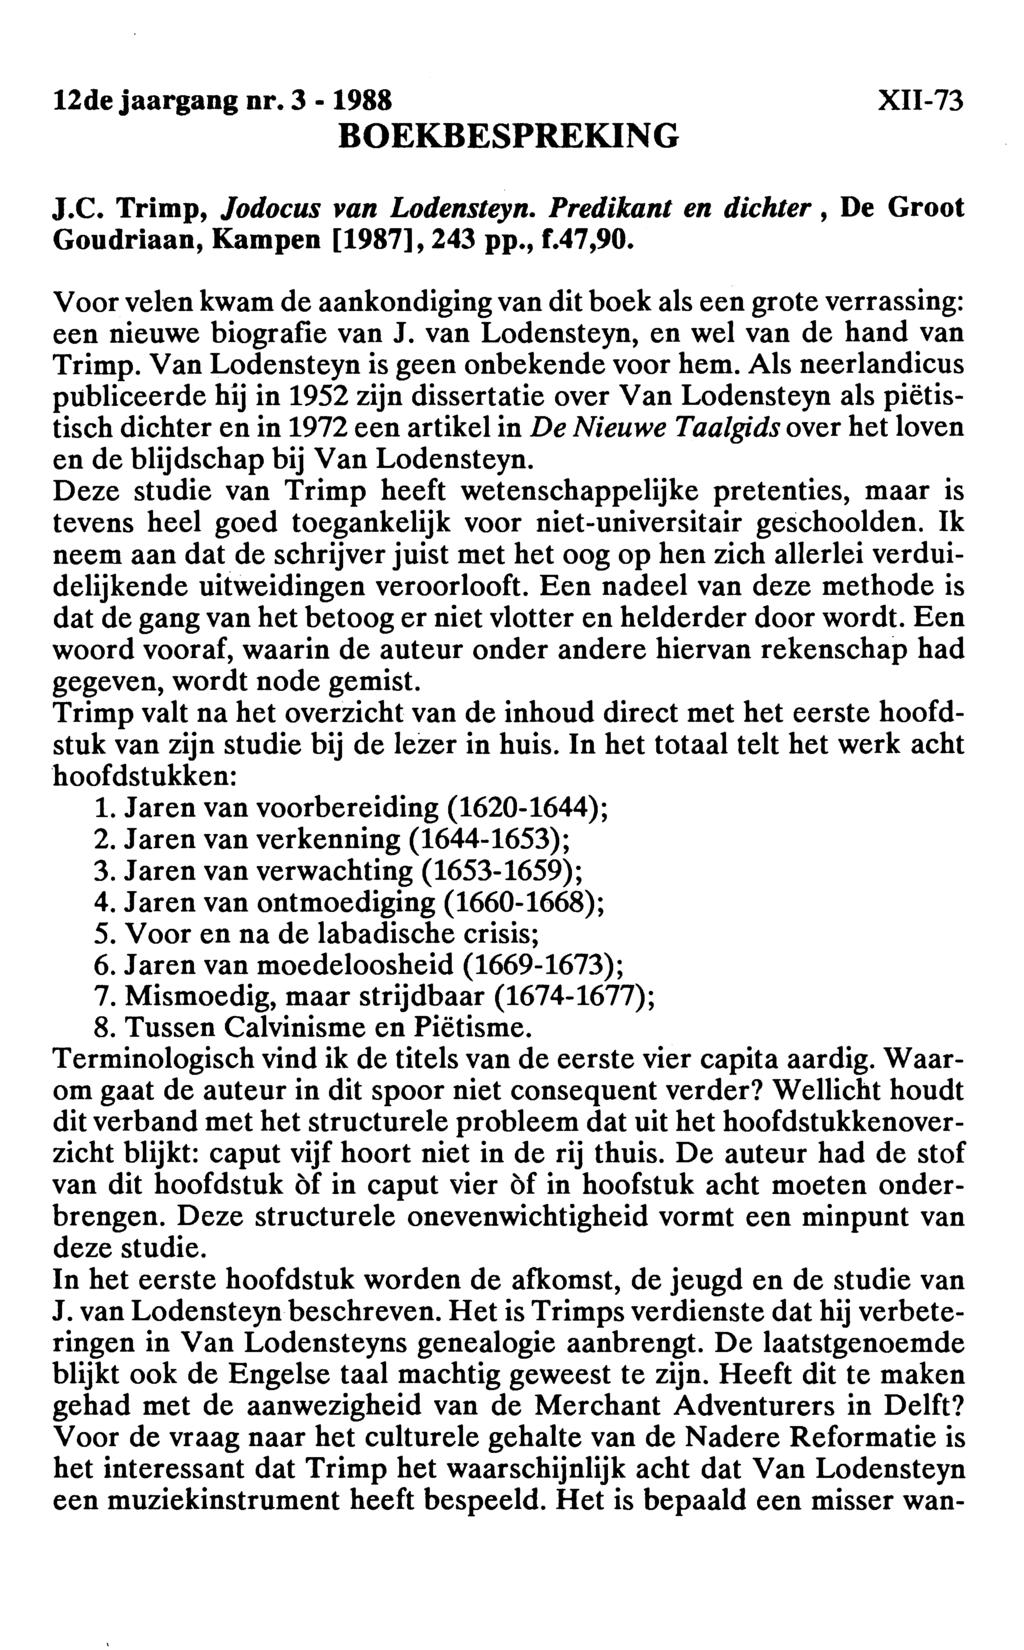 12de jaargang nr. 3-1988 BOEKBESPREKING XII-73 J.C. Trimp, Jodocus van Lodensteyn. Predikant en dichter, De Groot Goudriaan, Kampen [1987], 243 pp., f.47,90.